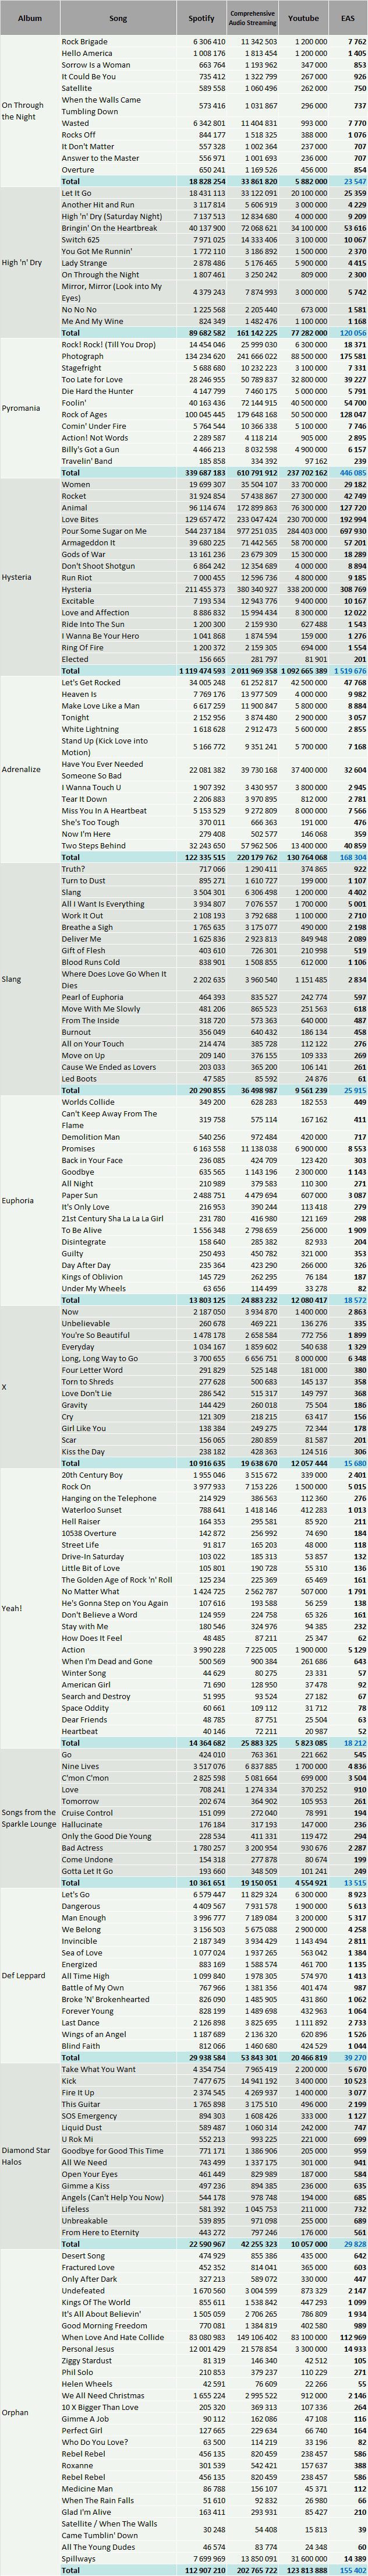 CSPC Def Leppard discography streaming statistics